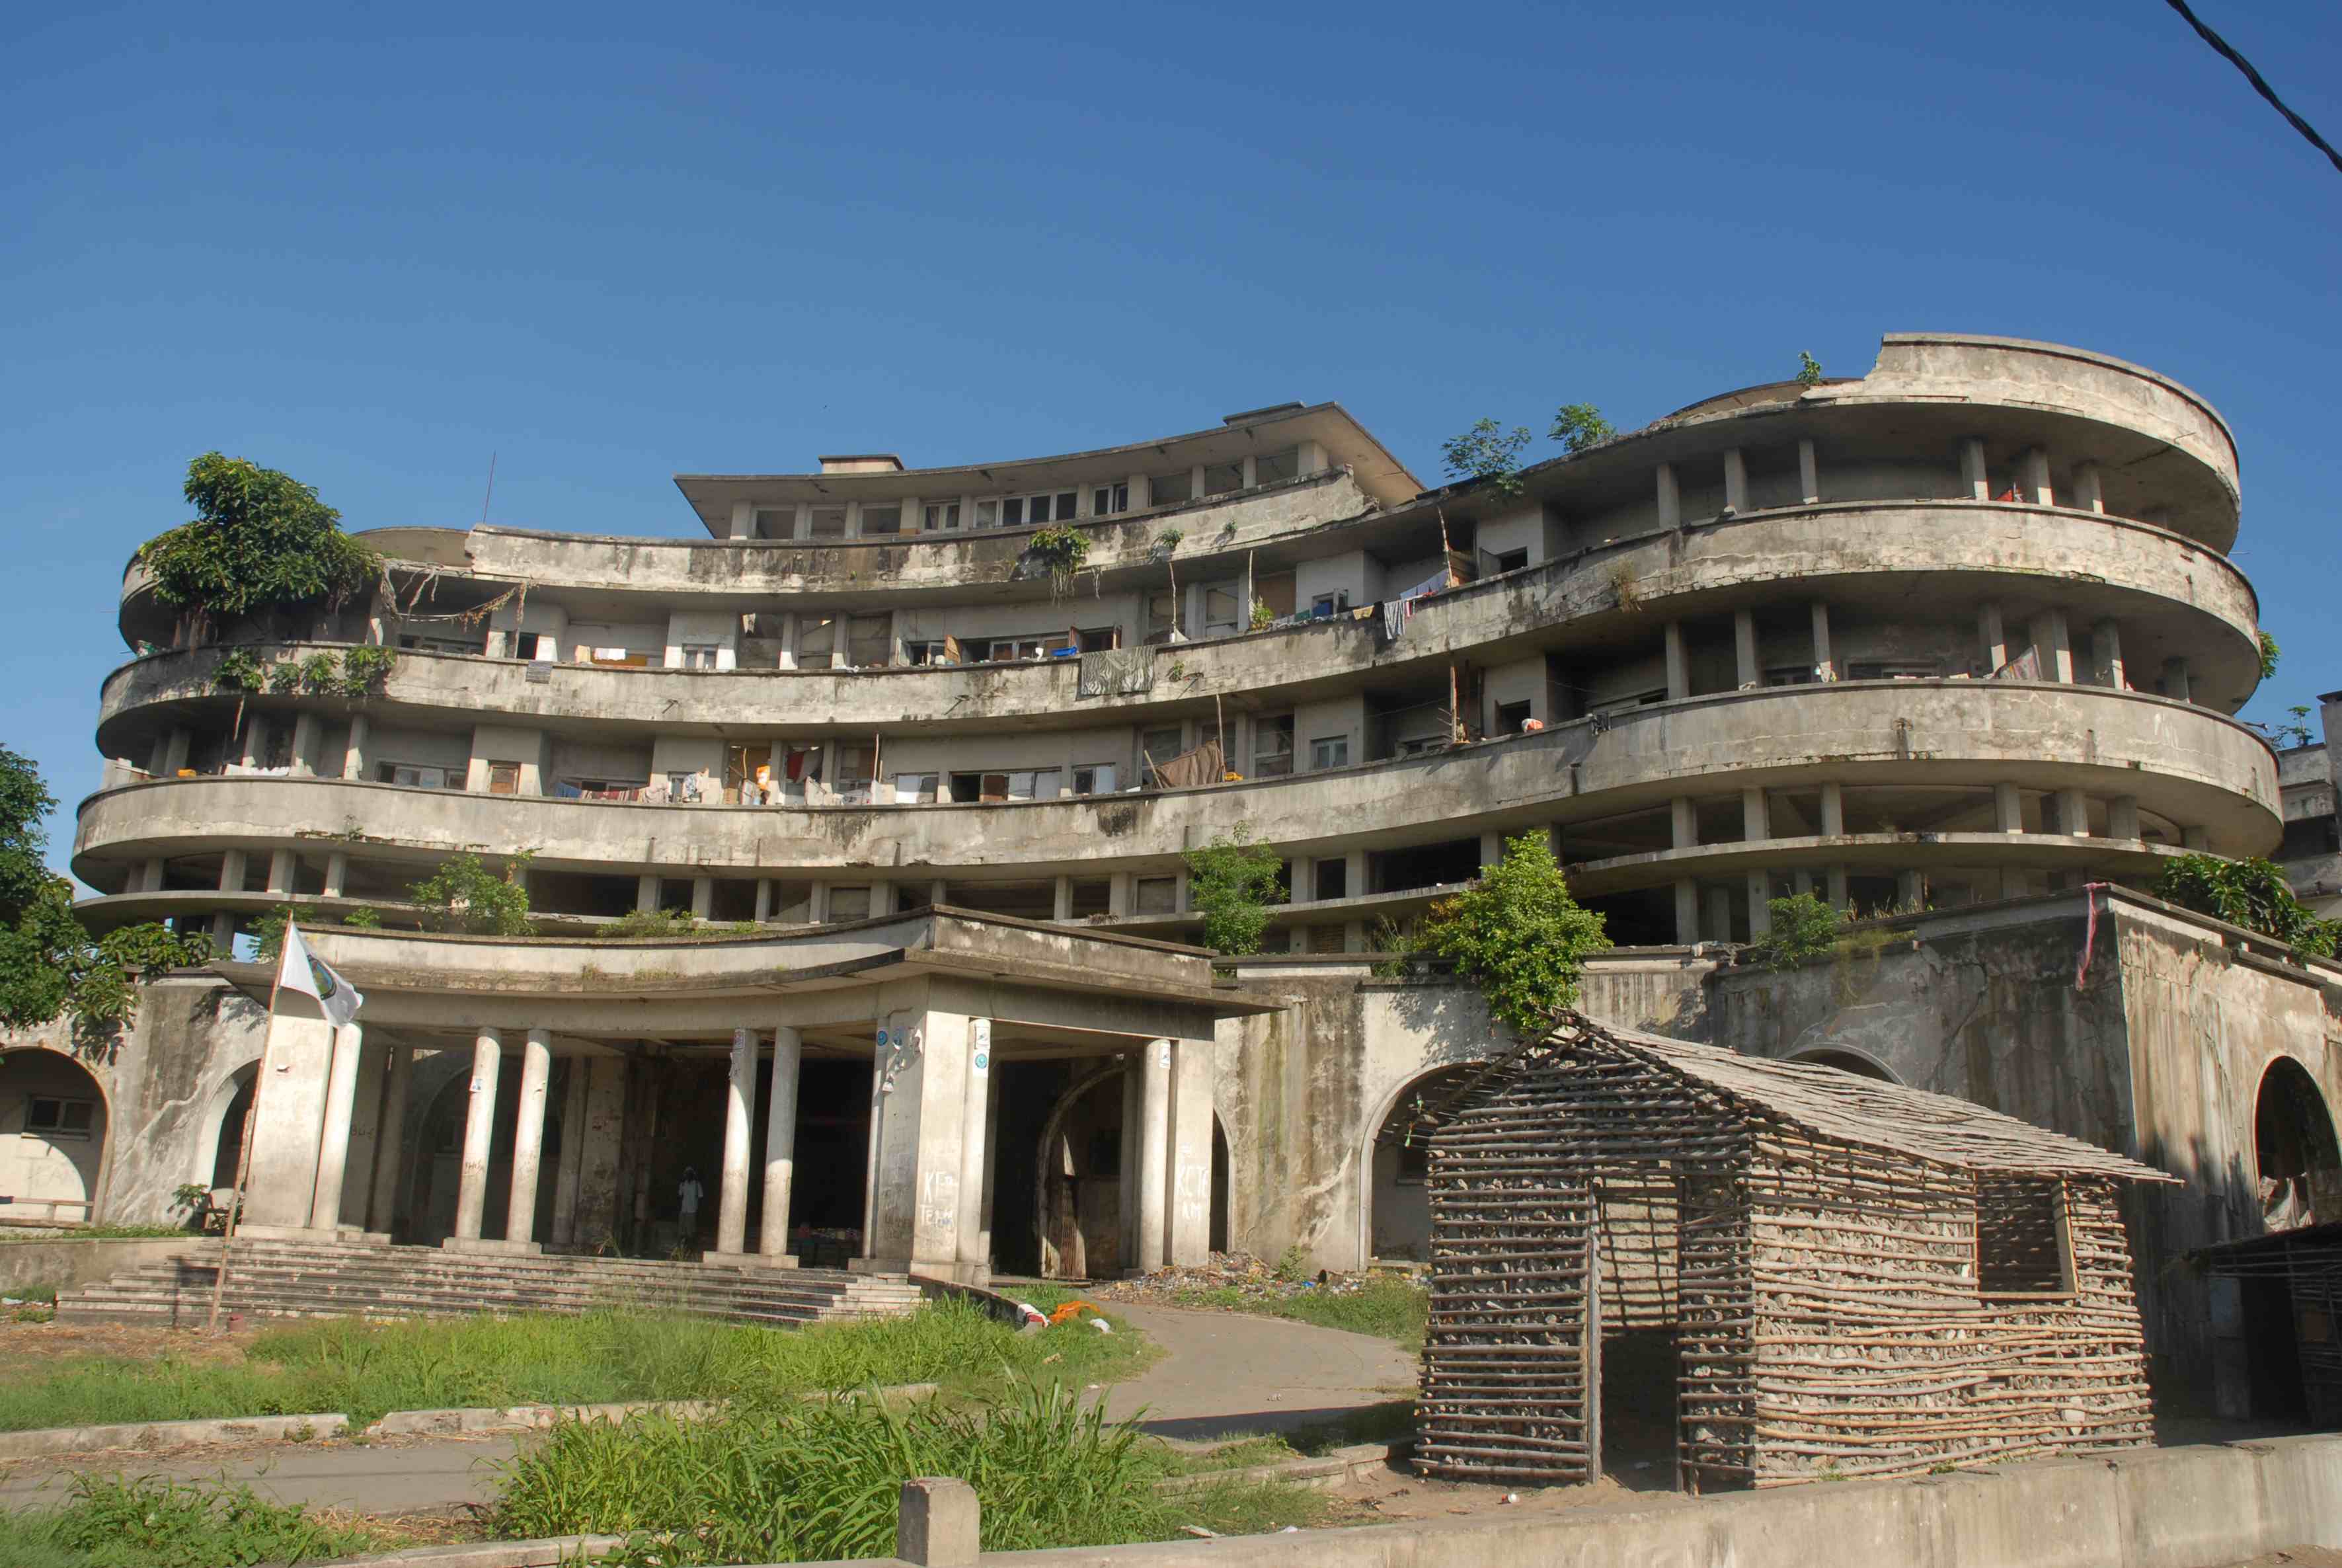 Le grande Hotel da Beira, photographie de Otávio Raposo